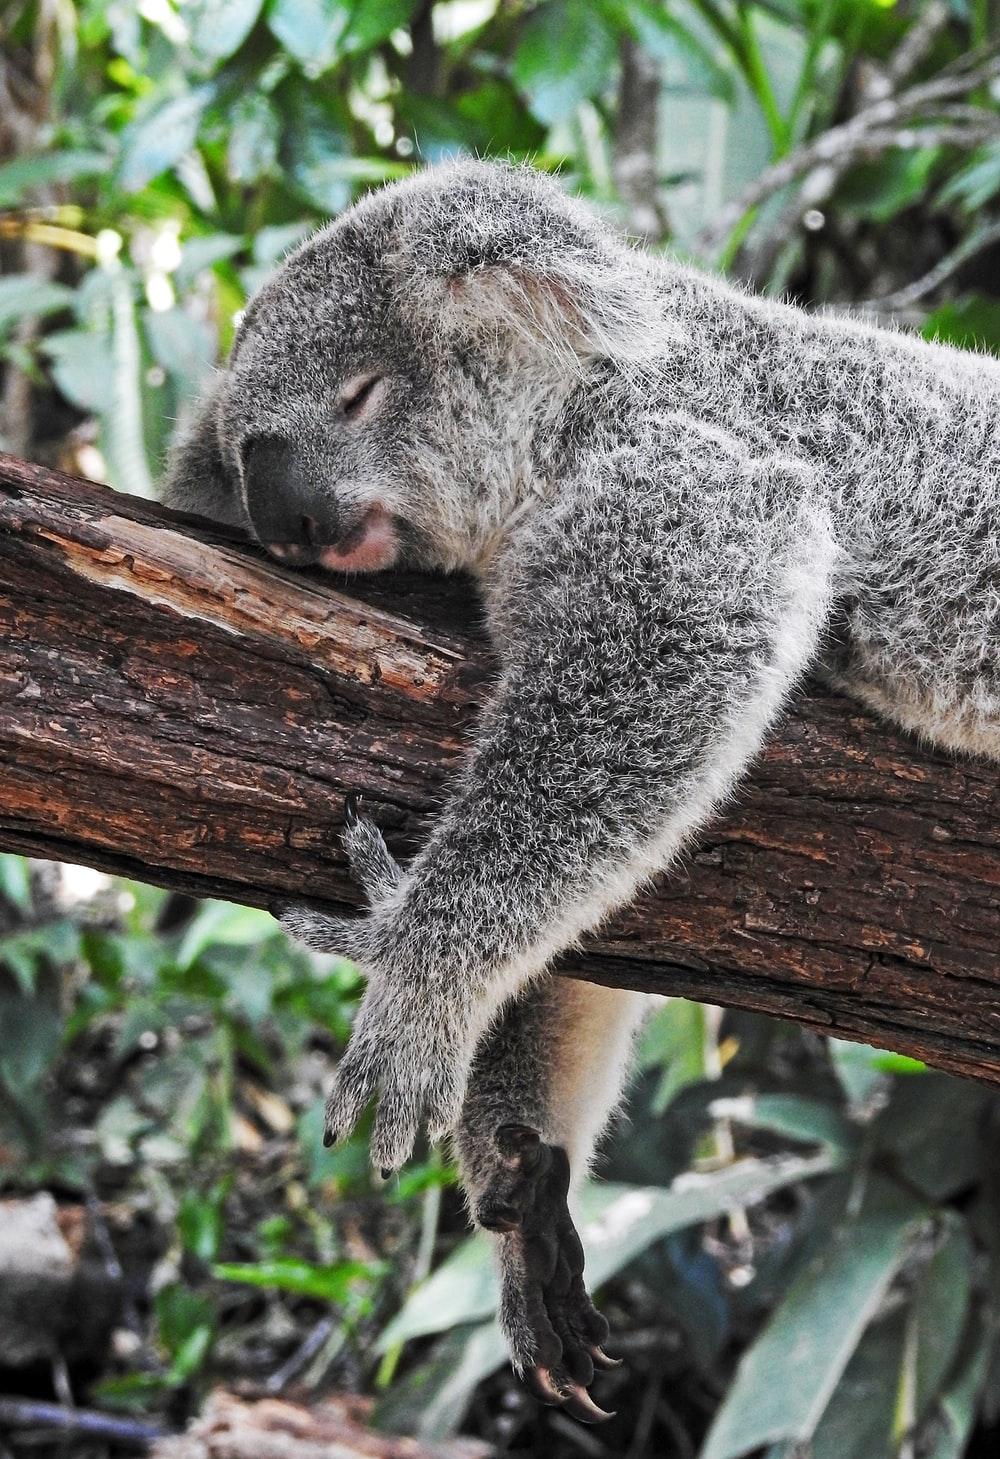 Koala Picture. Download Free Image